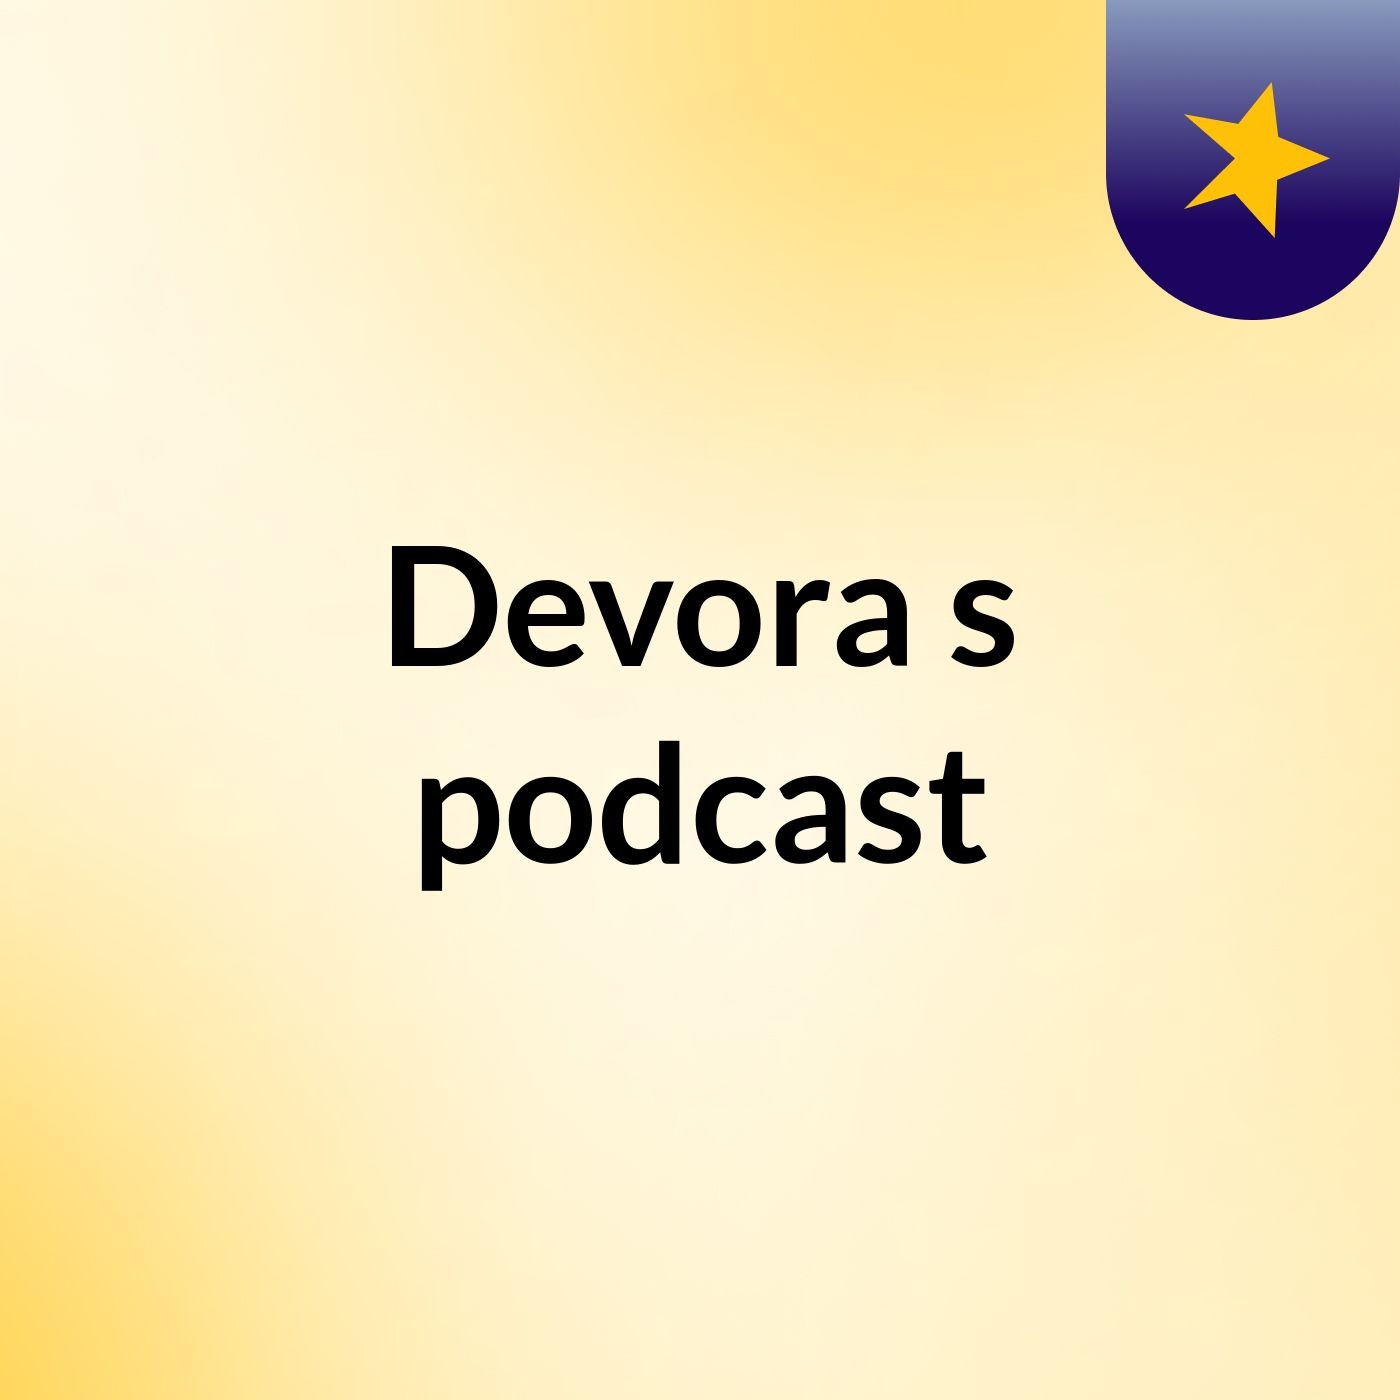 Episode 2 - Devora's podcast